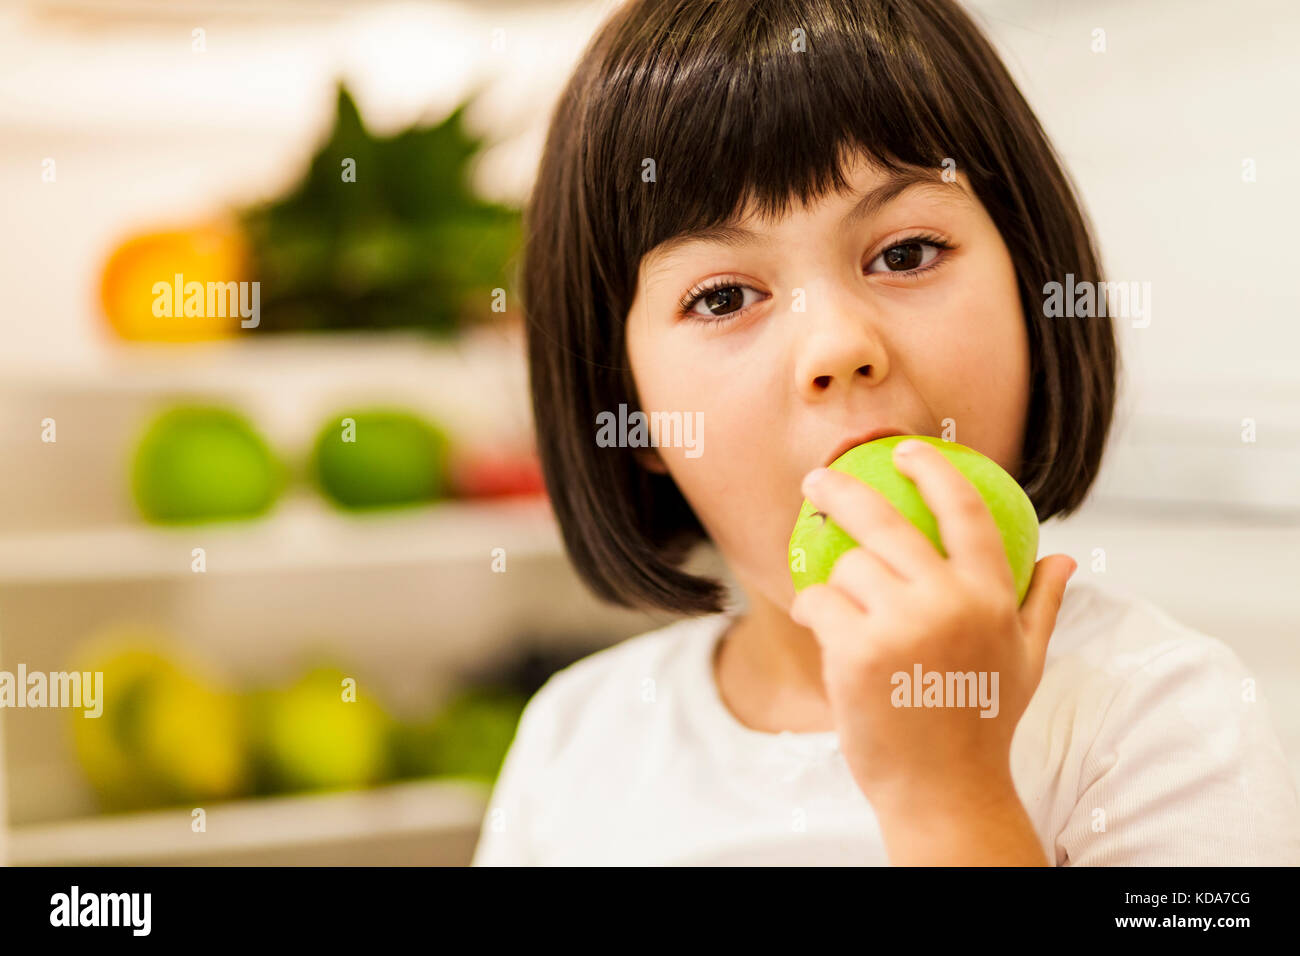 Portrait of cute black hair little girl eating apple Banque D'Images